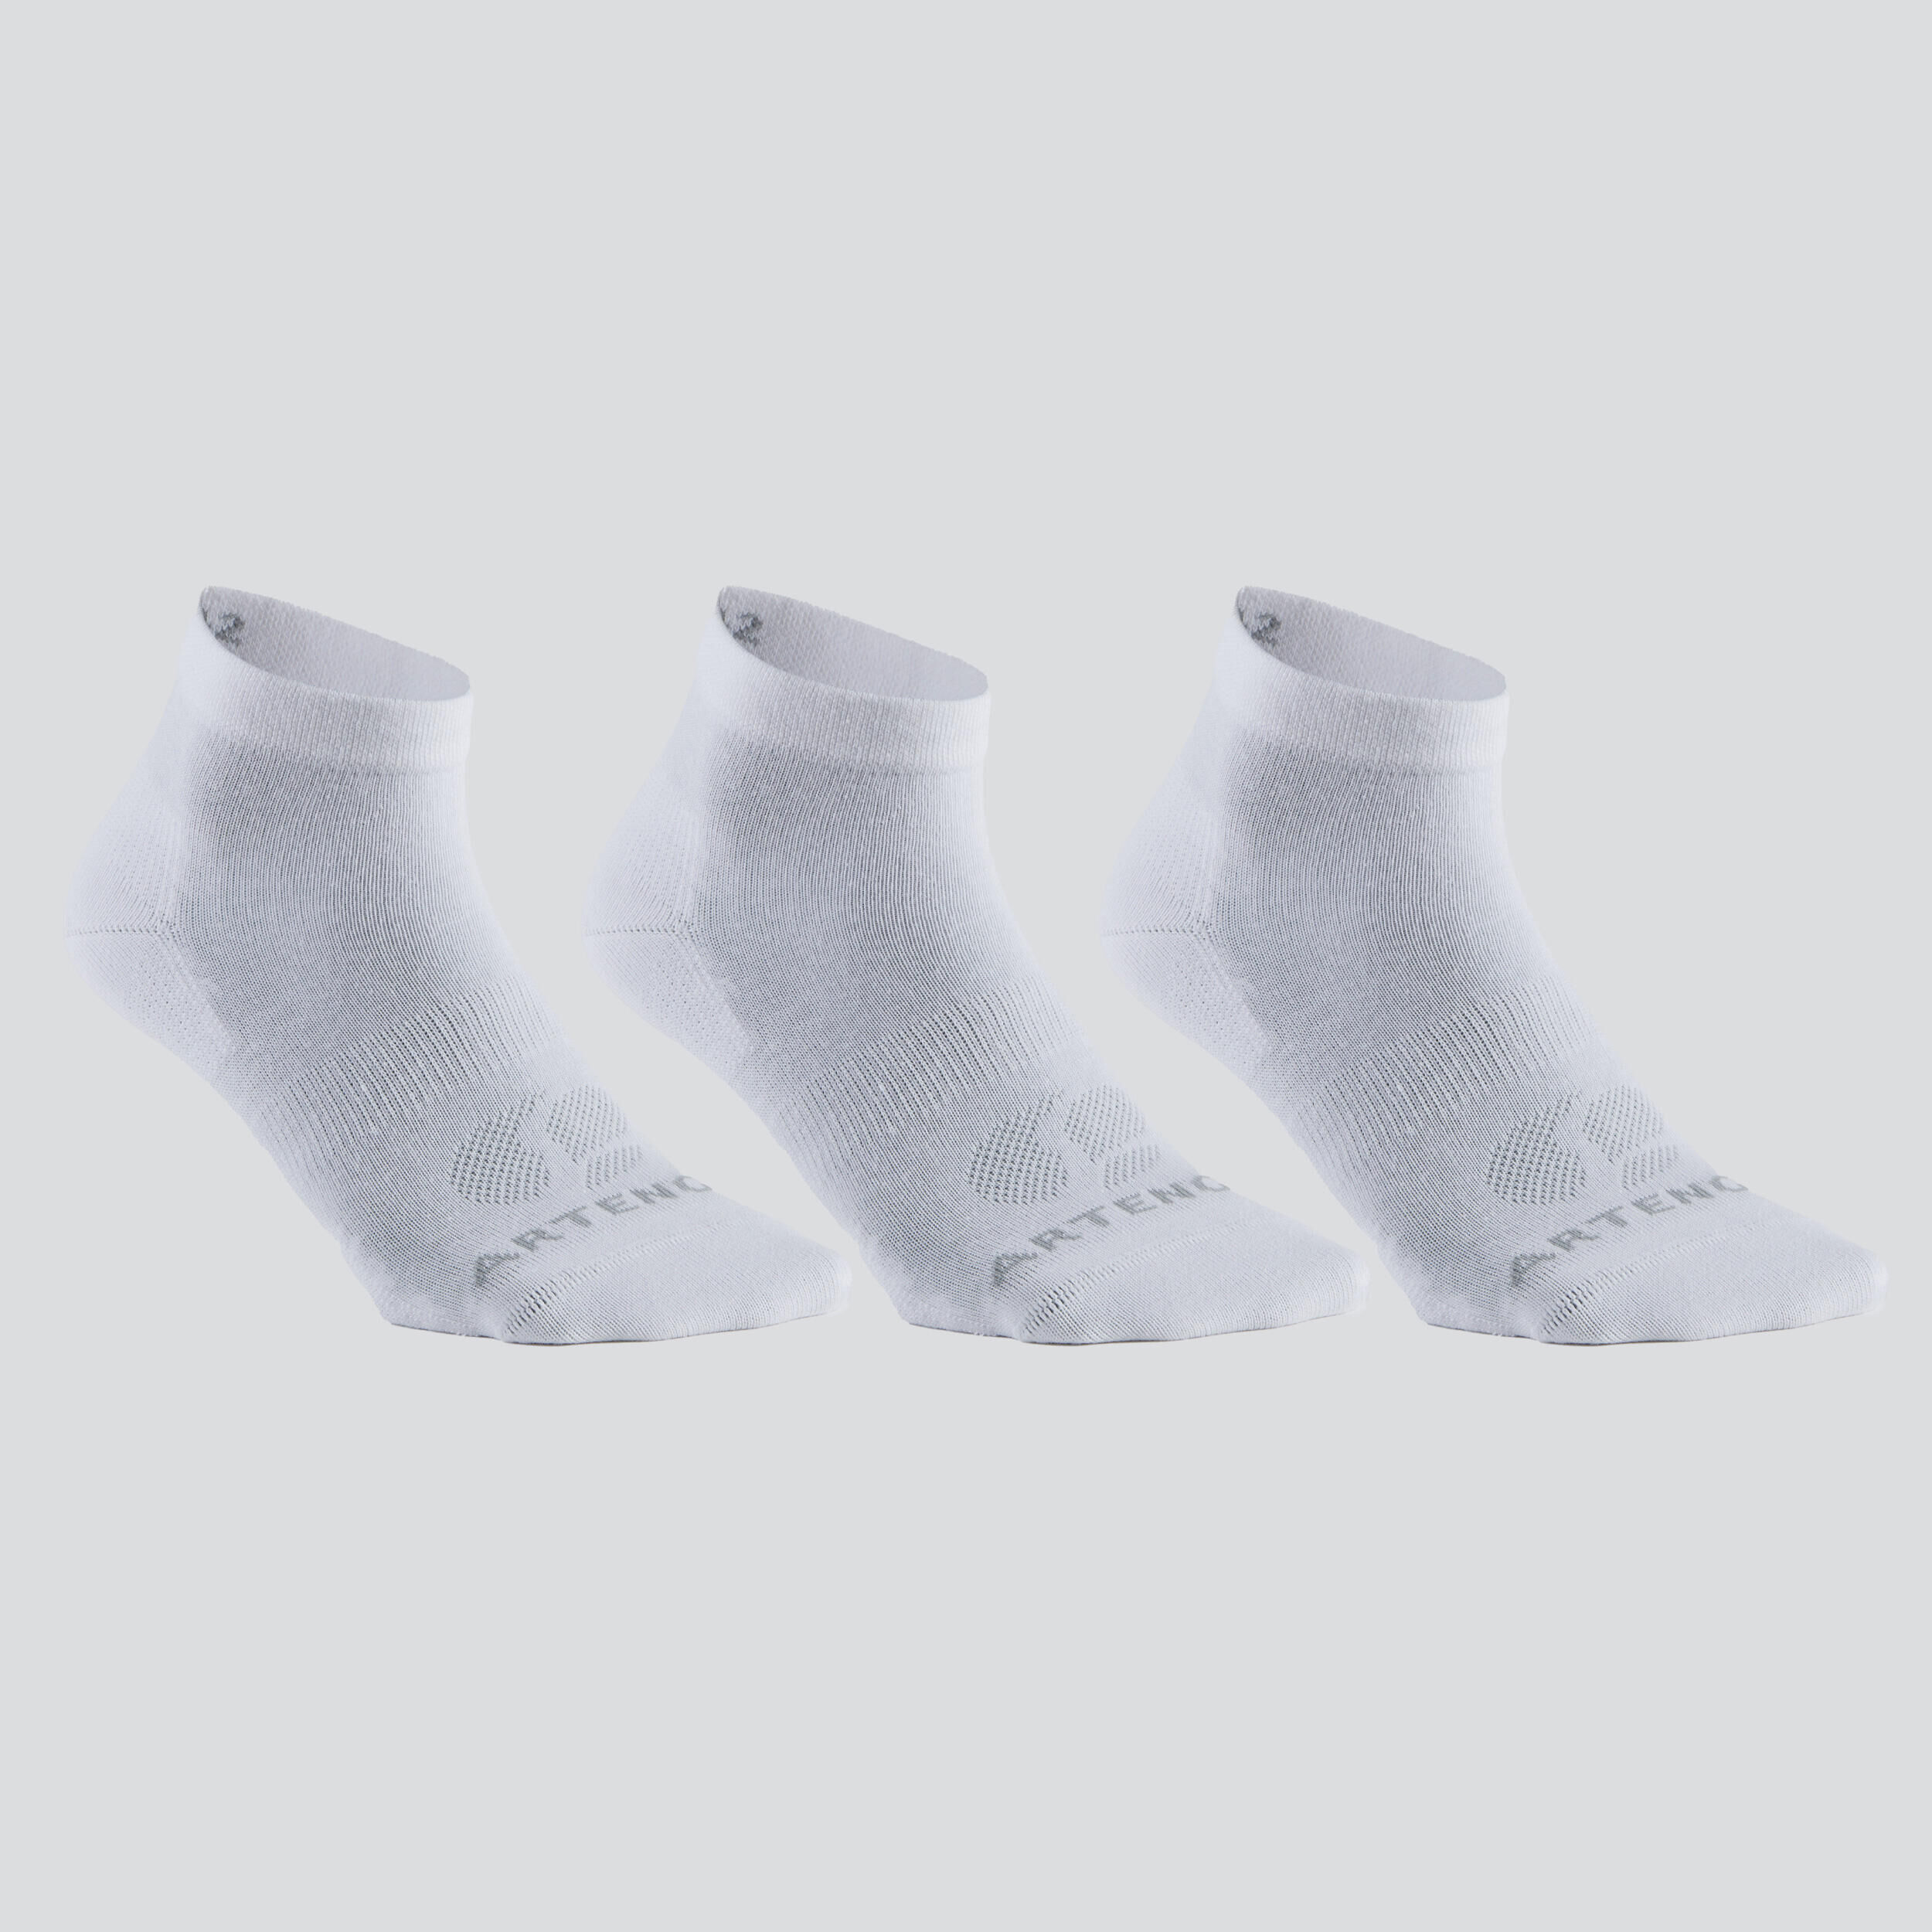 ARTENGO RS 160 Adult Mid-High Sports Socks Tri-Pack - White